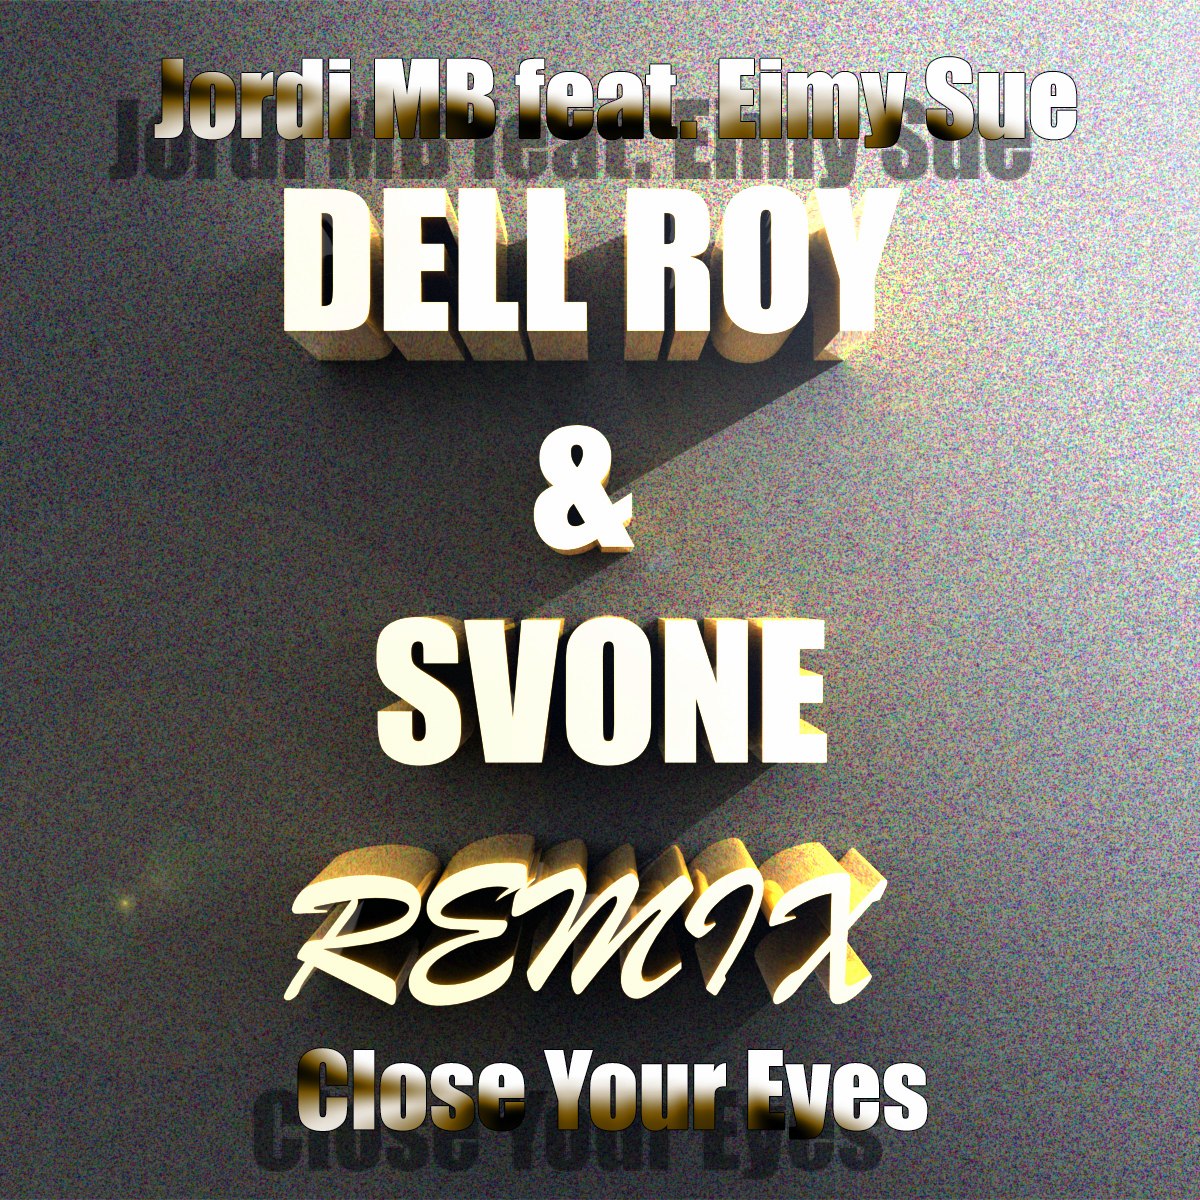 Jordi Mb feat. Eimy Sue - Close Your Eyes (Dell Roy & Svone Remix) [2014]